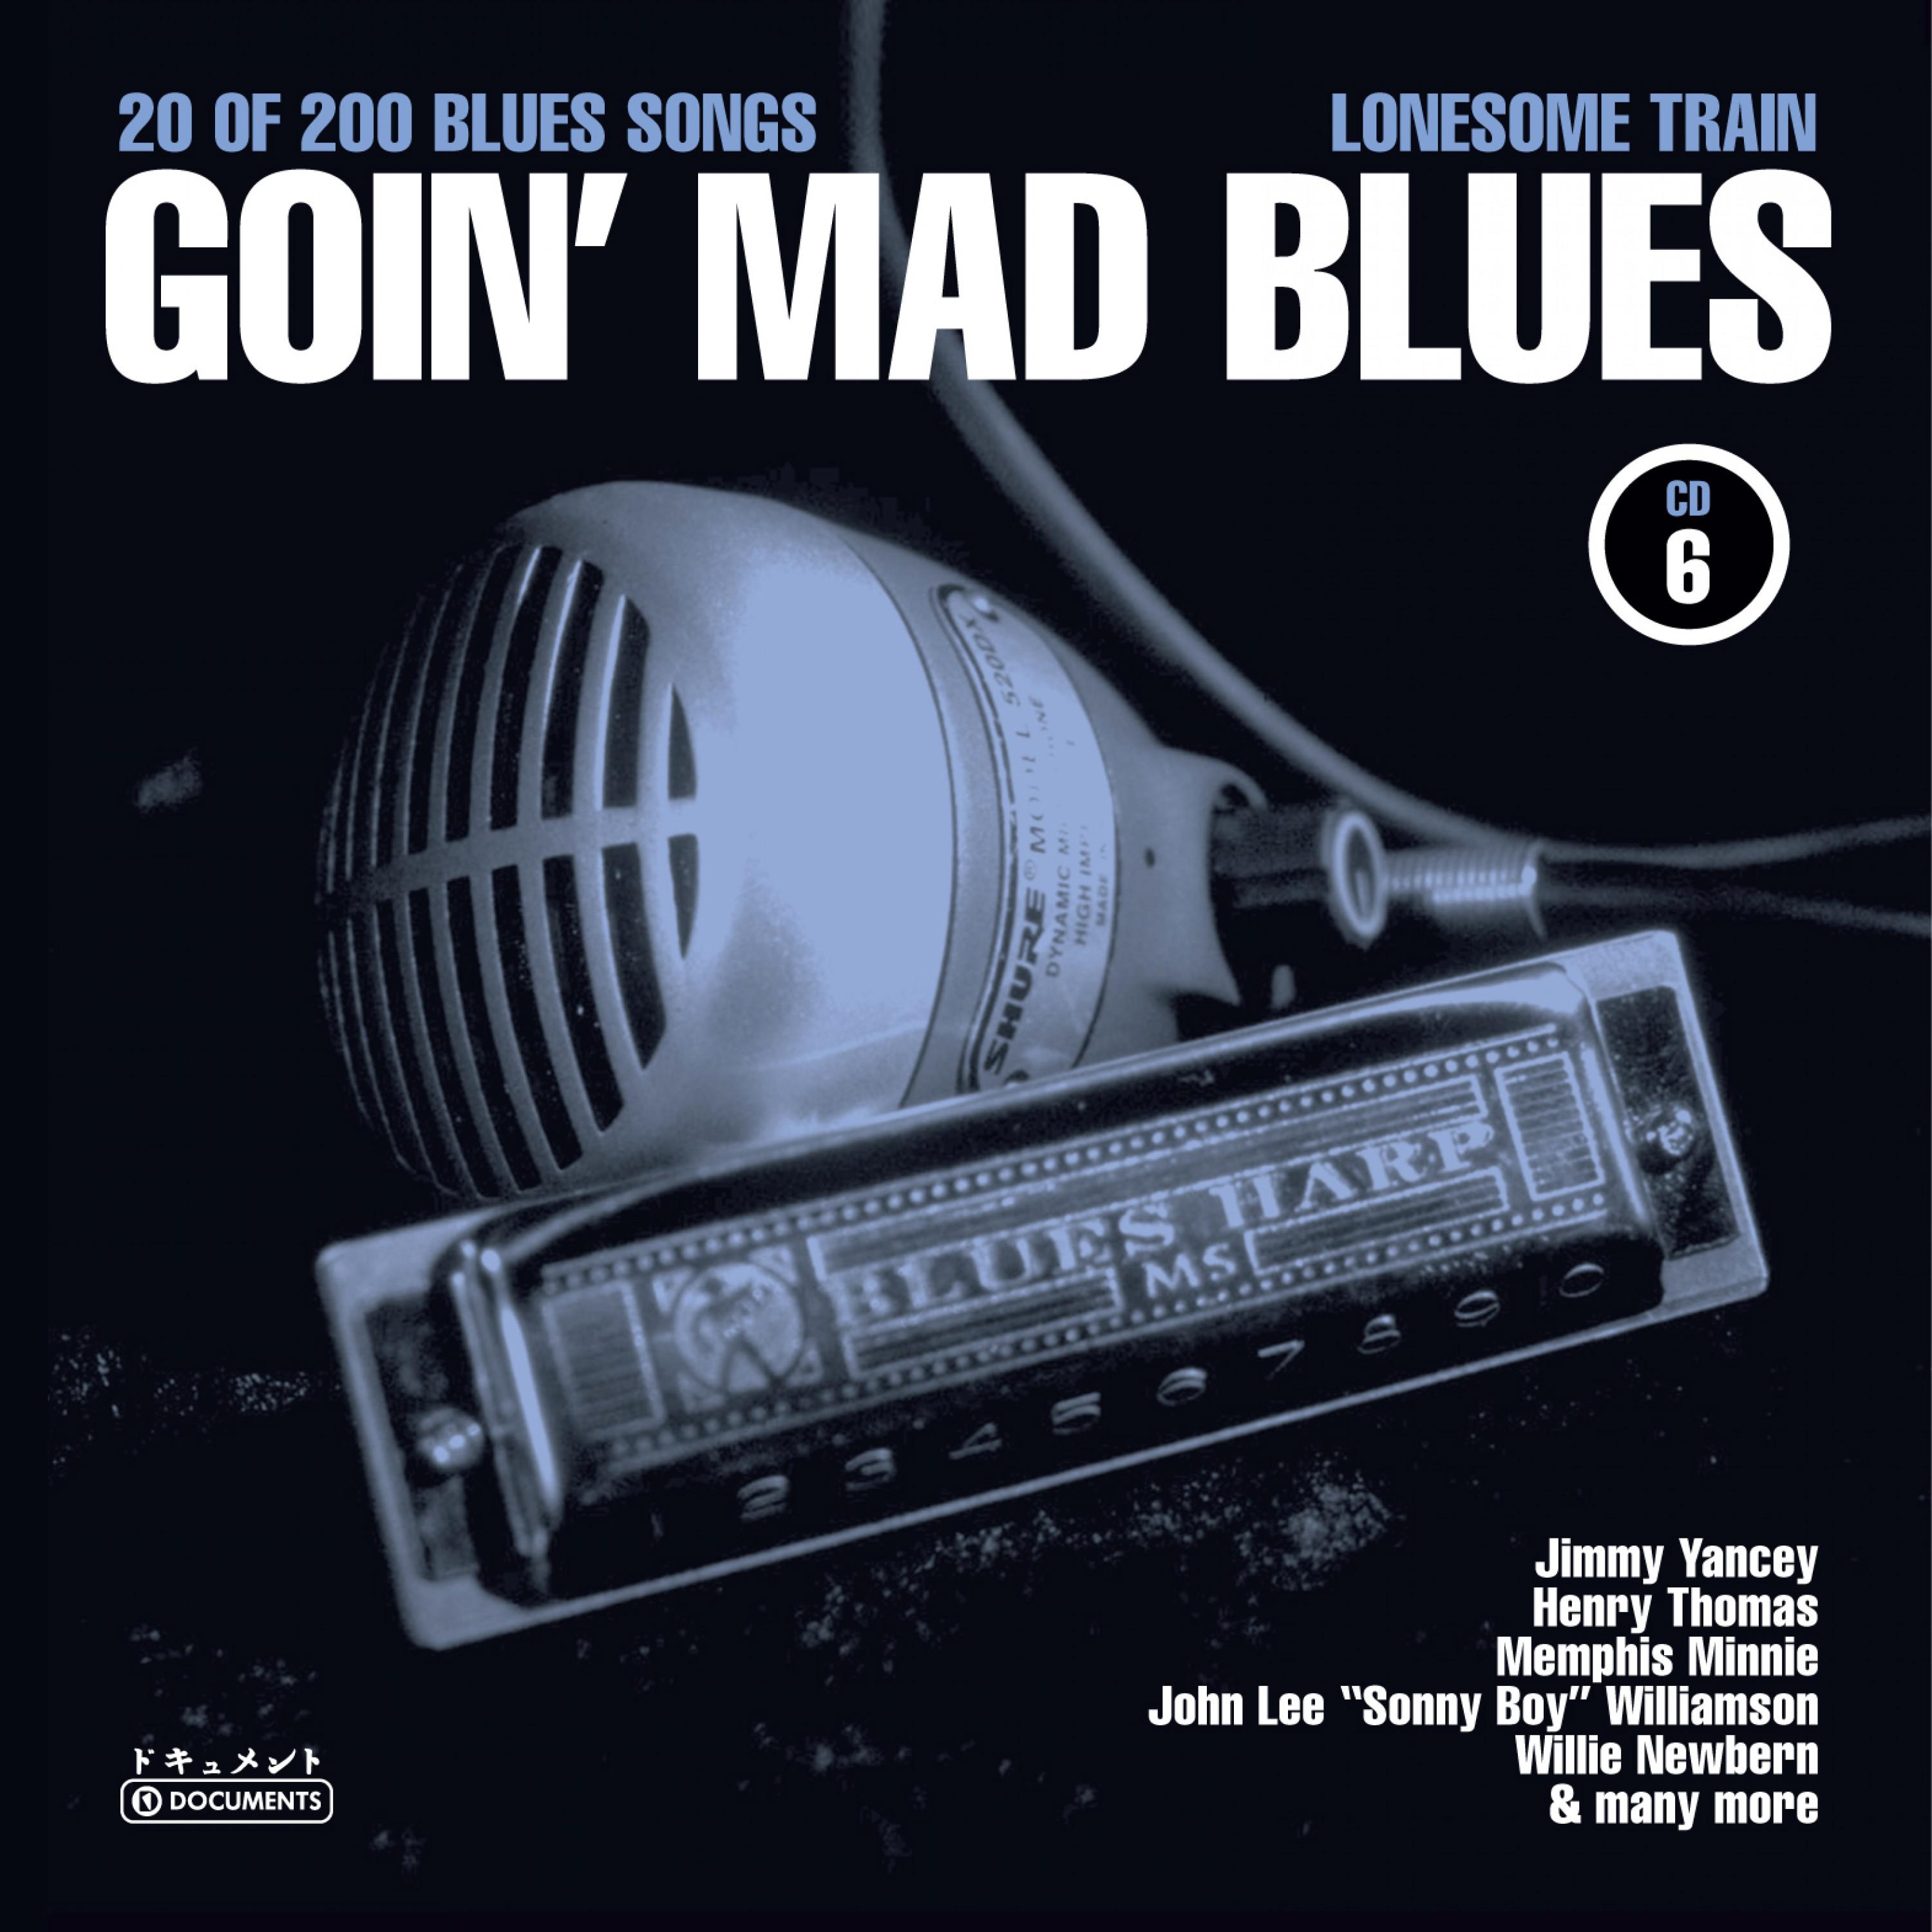 Goin' Mad Blues Vol. 6